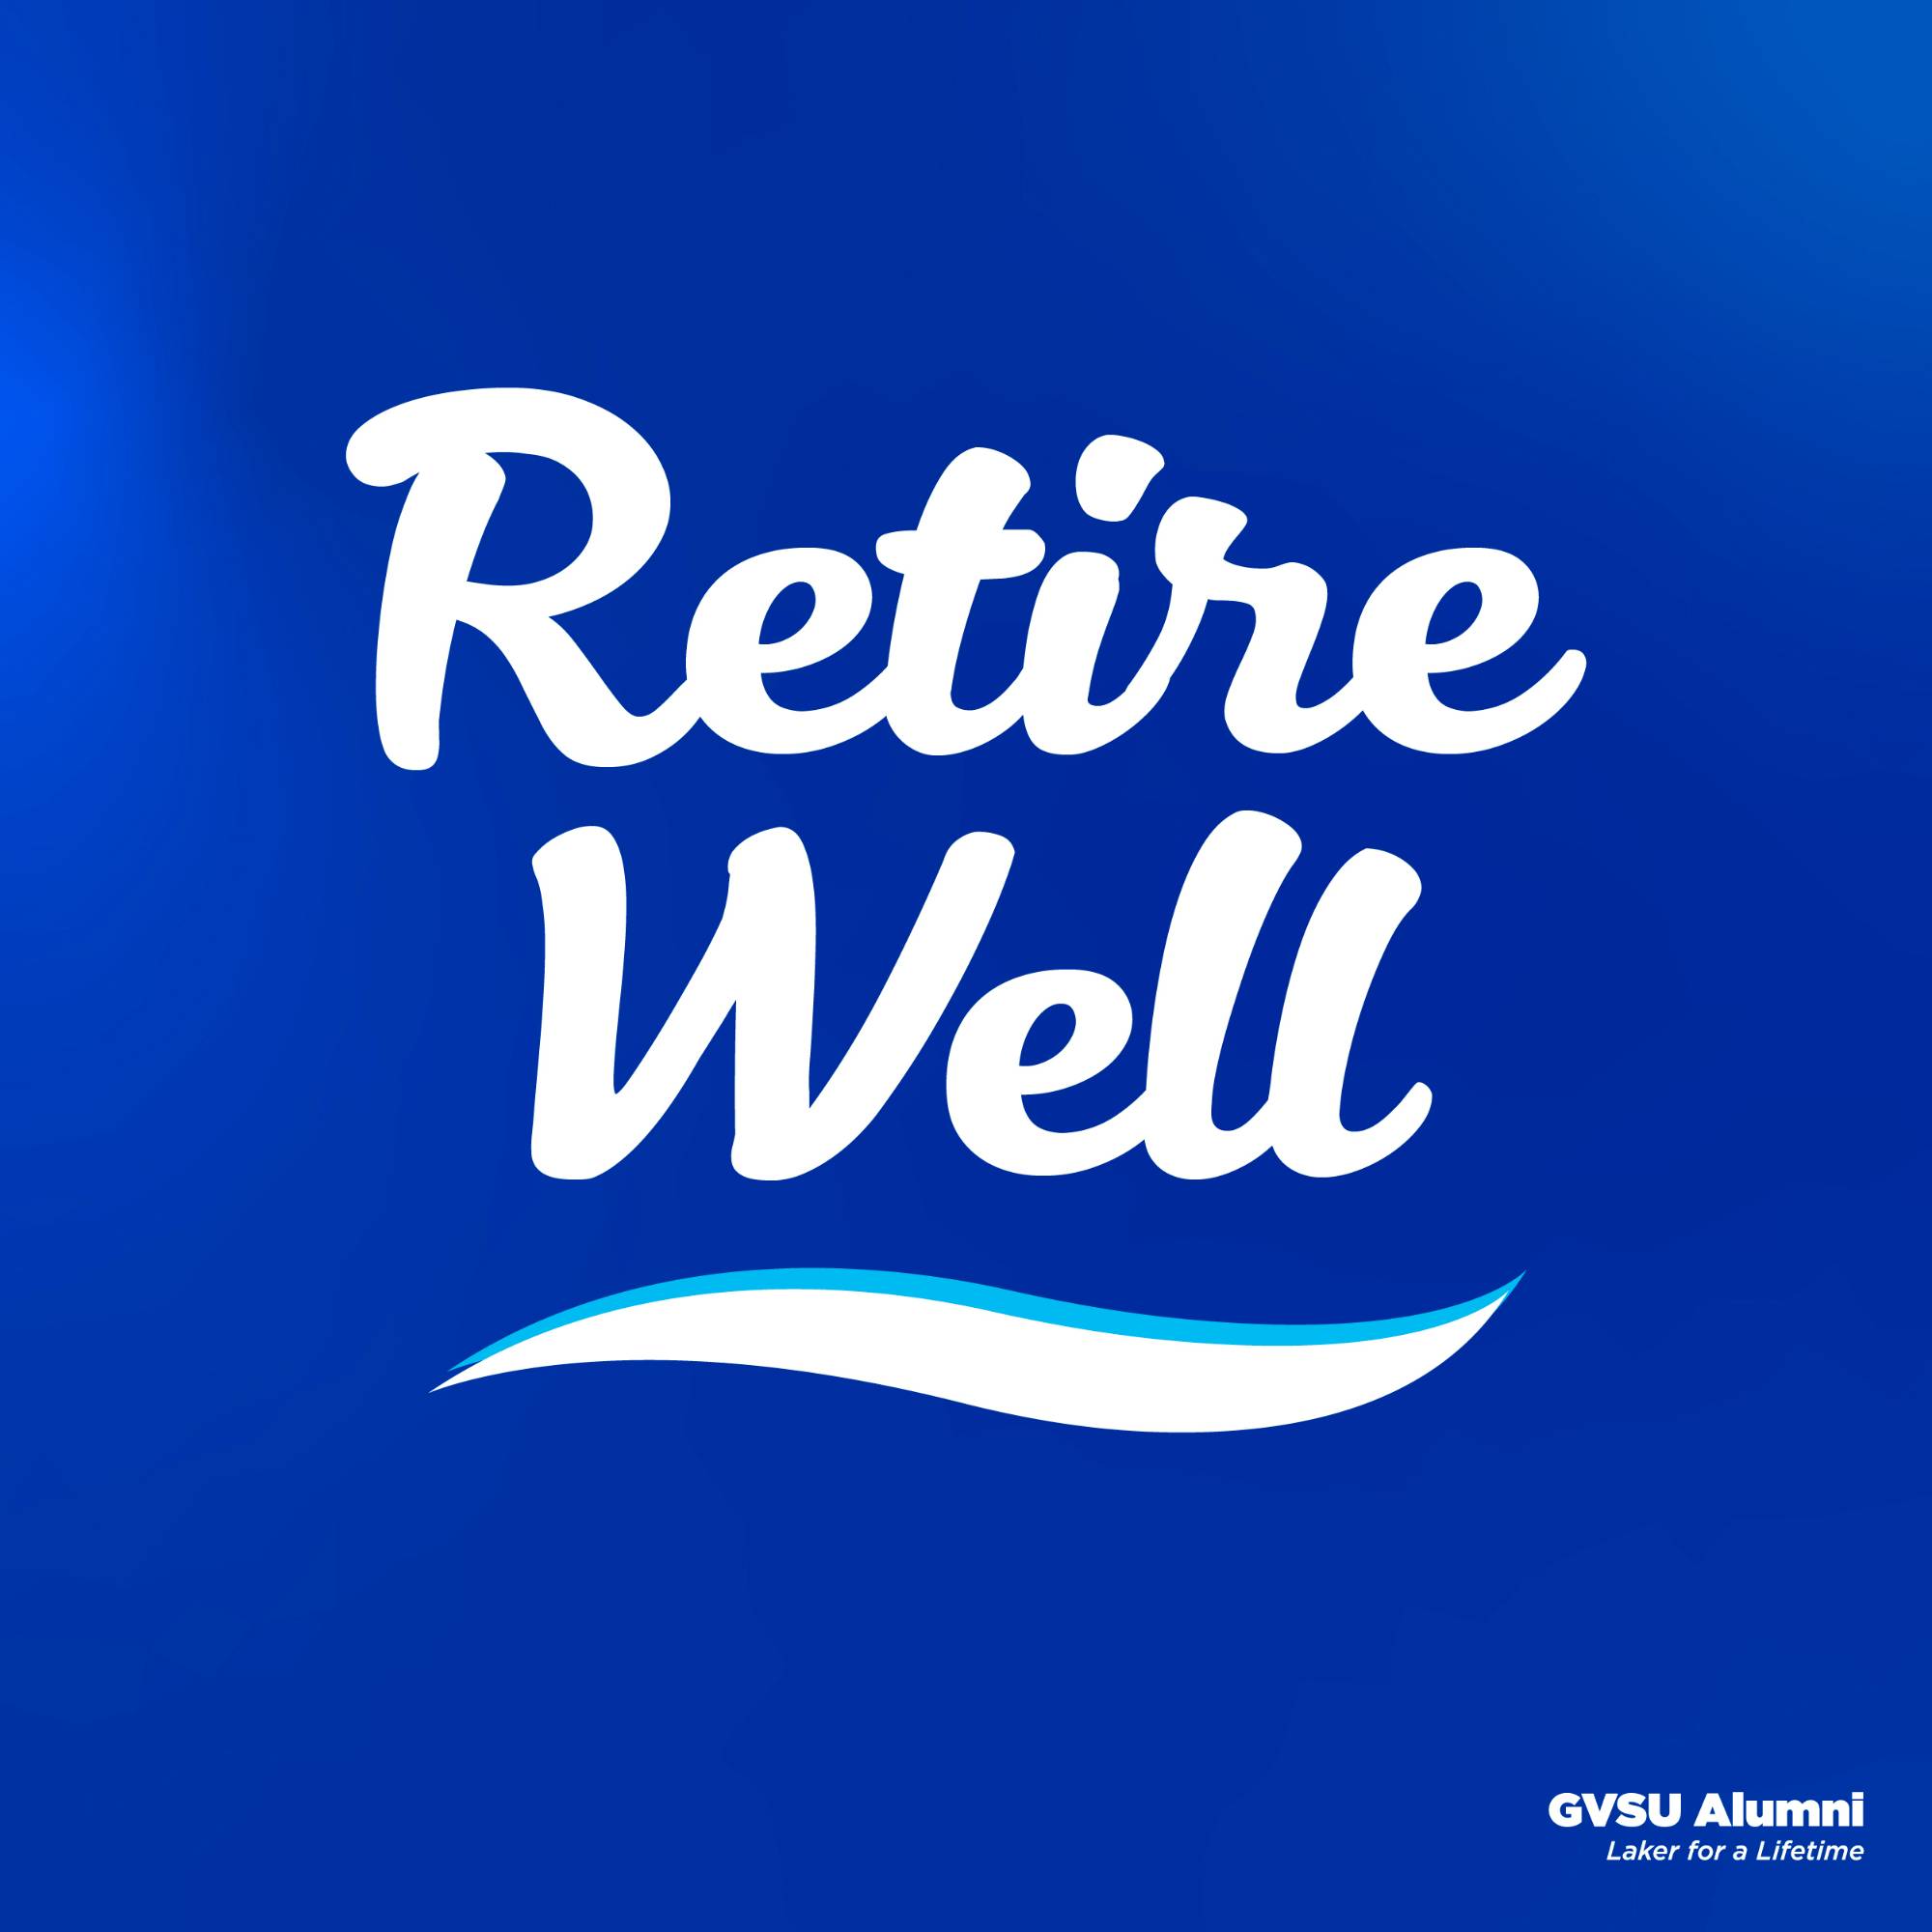 Retire Well